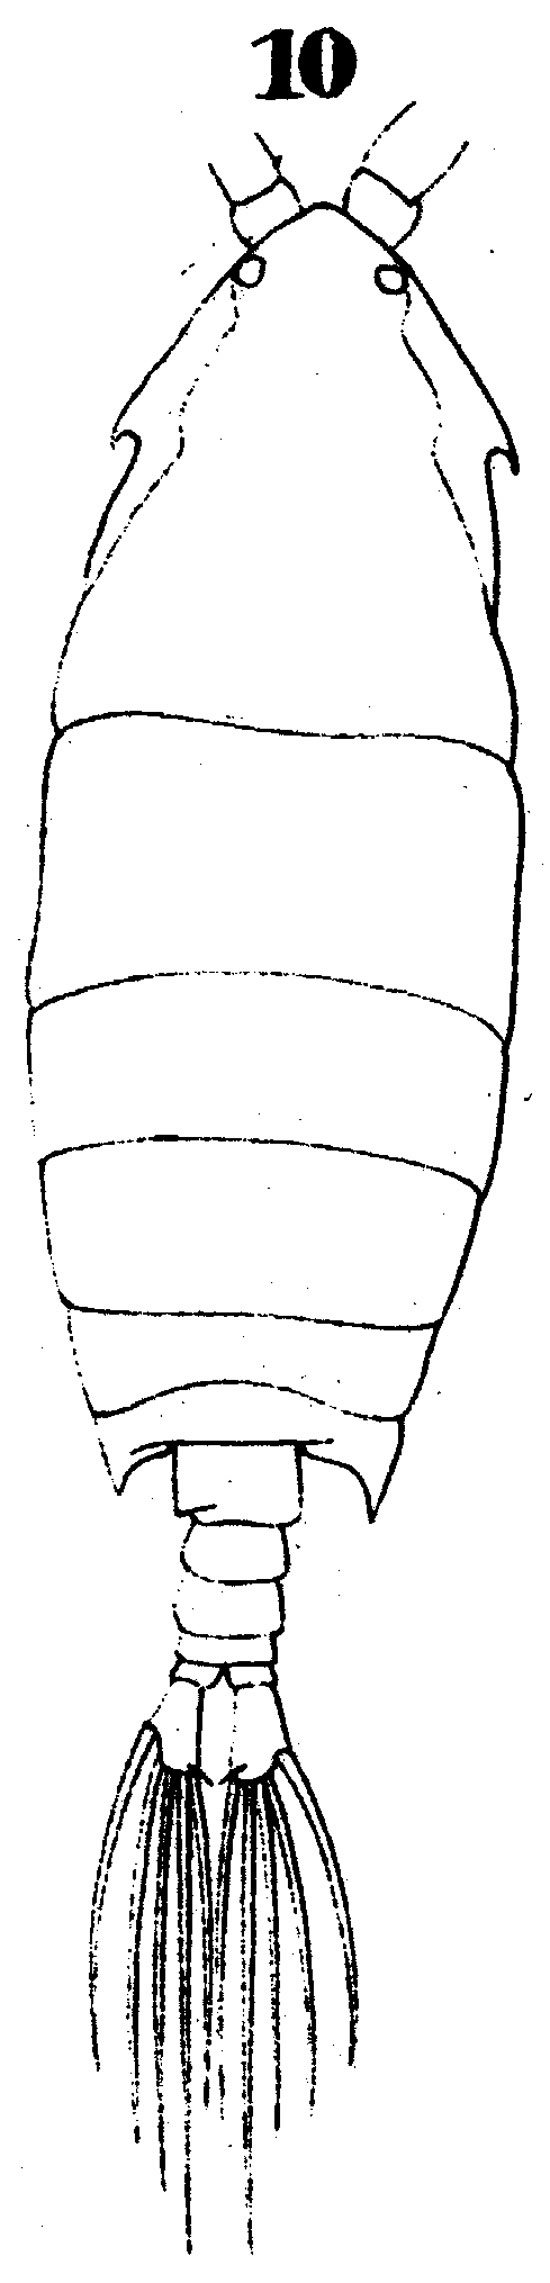 Species Pontella lobiancoi - Plate 5 of morphological figures